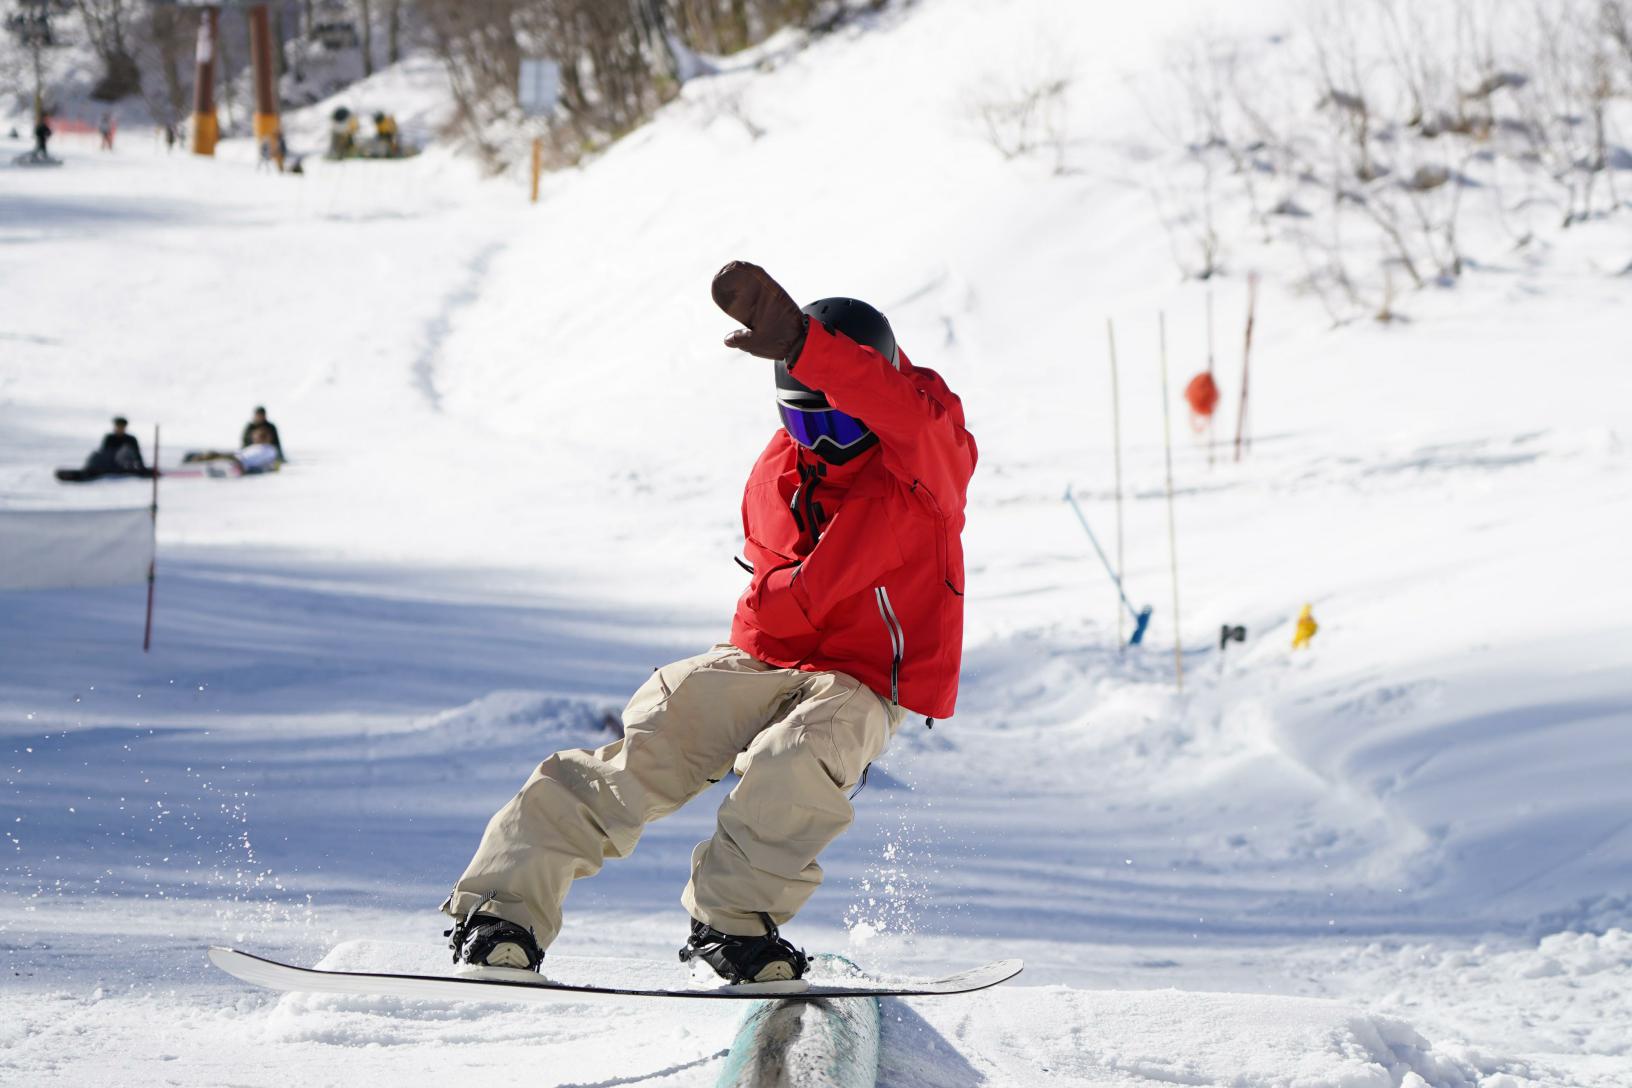 Skiing VS Snowboarding: What's easier?